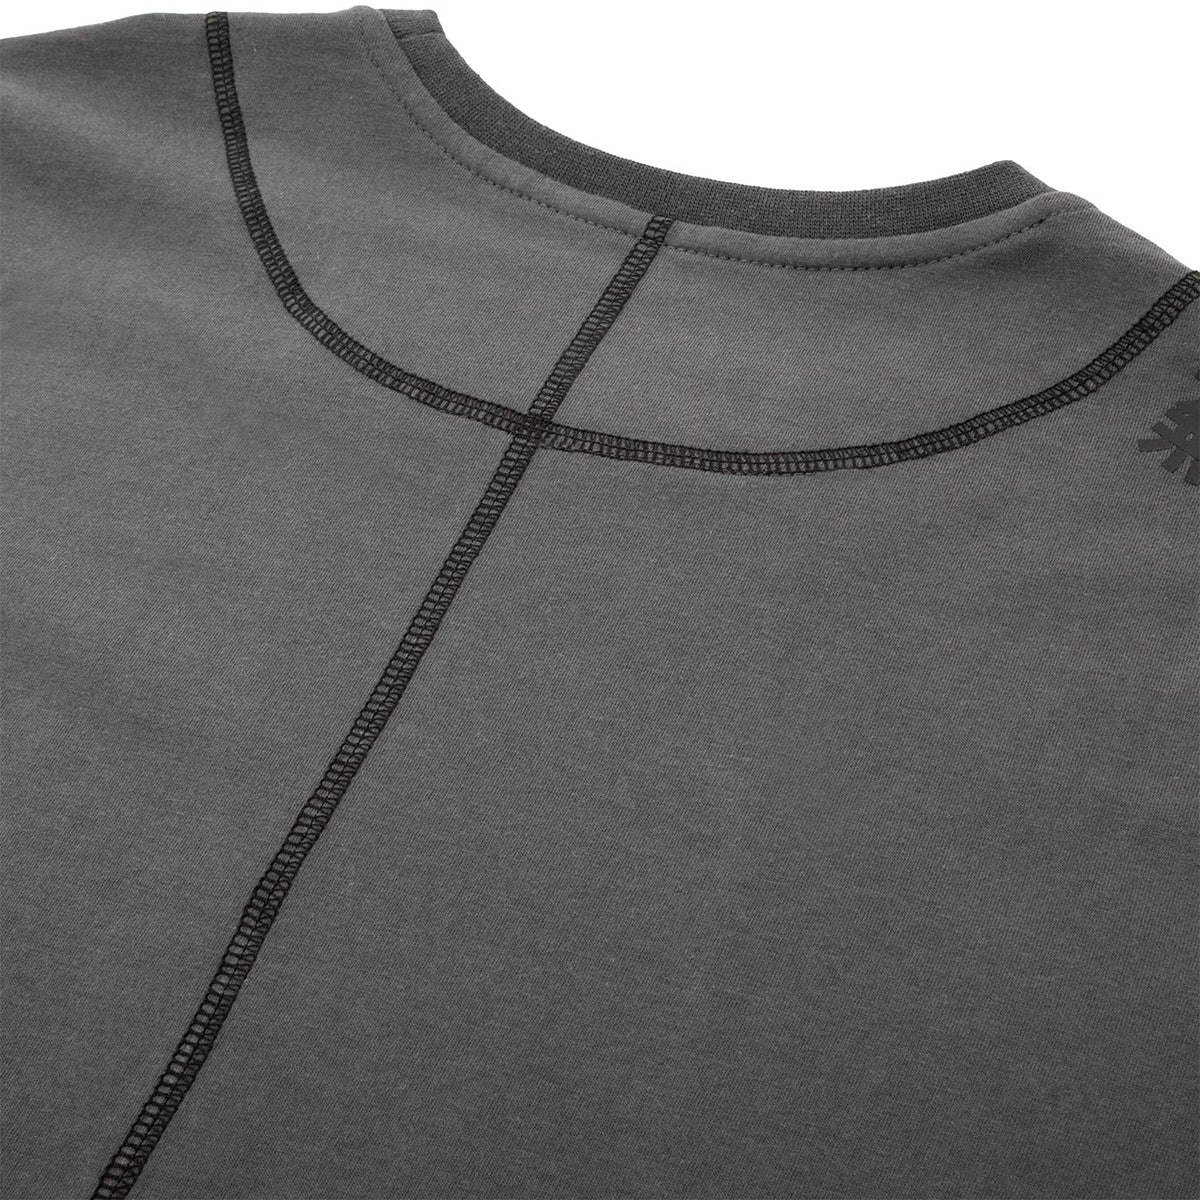 Venum Limitless Short Sleeve T-Shirt - Gray Venum